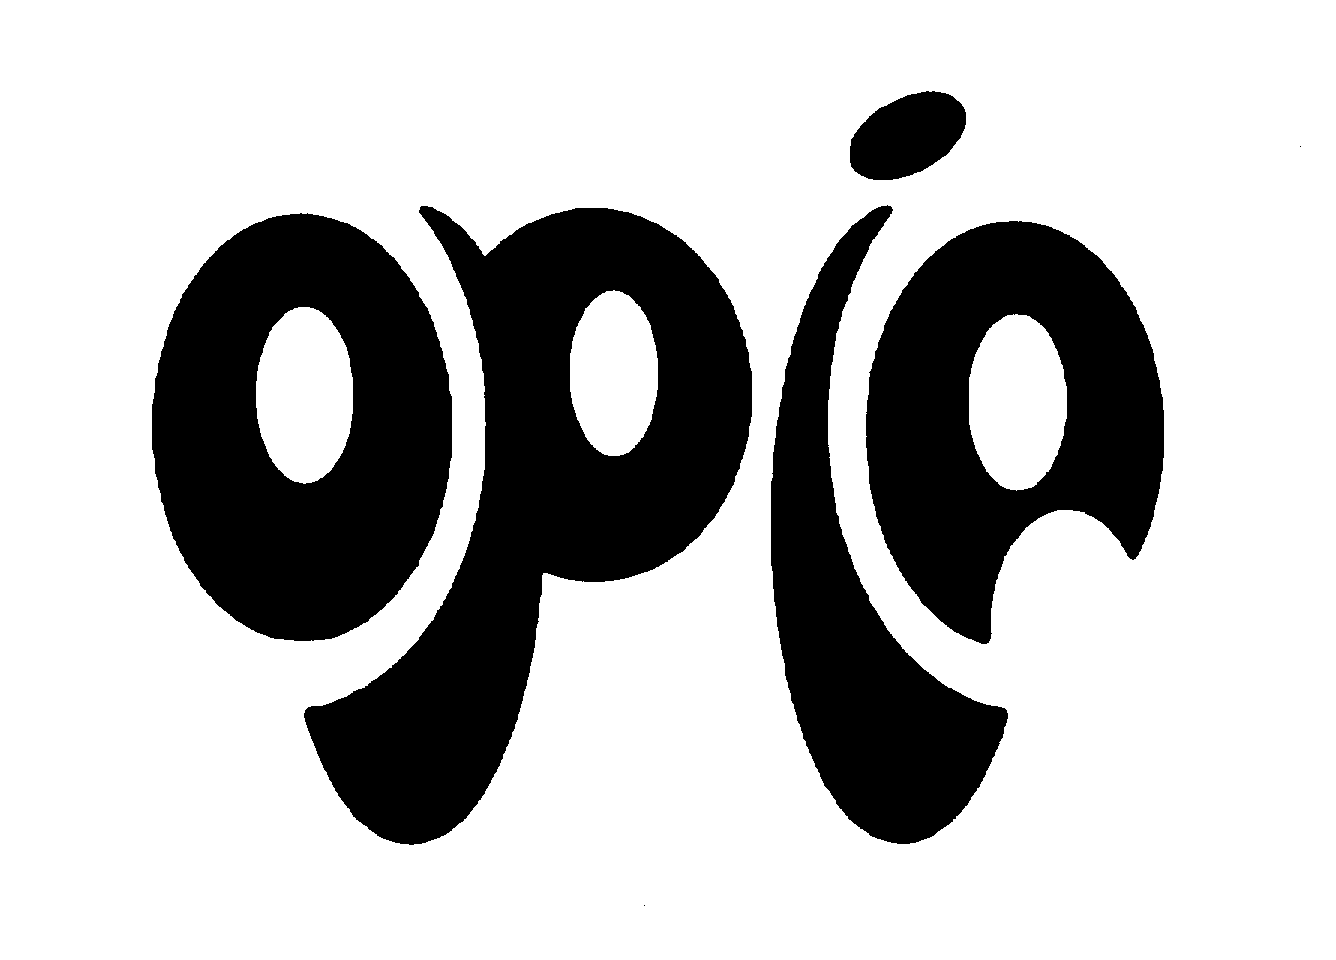 Trademark Logo OPIA